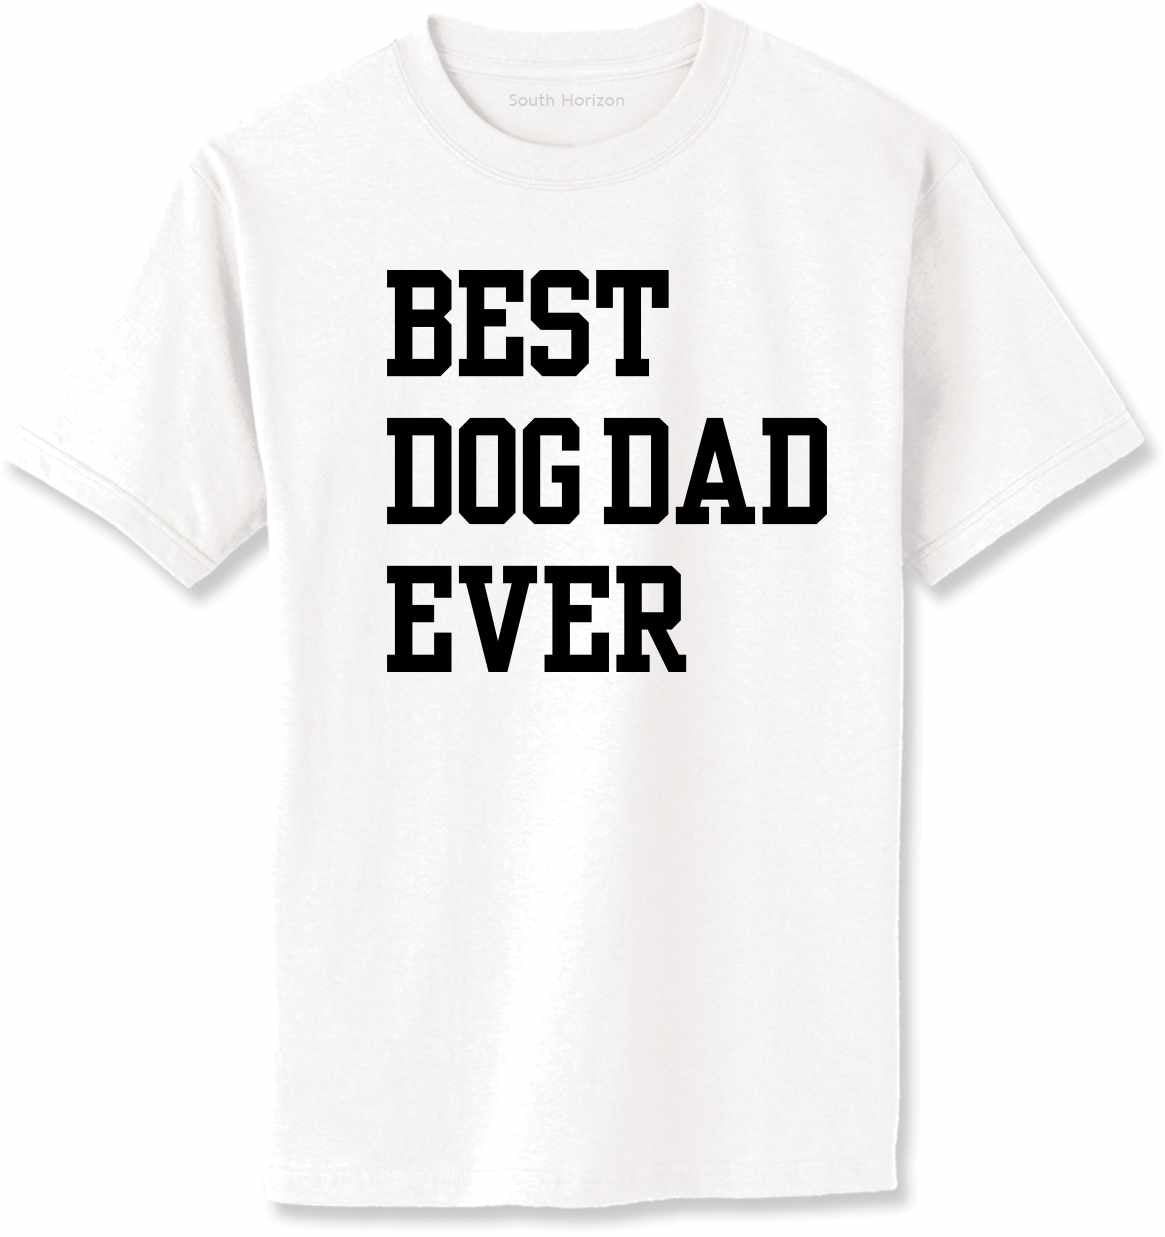 Best Dog Dad Ever Adult T-Shirt (#1091-1)